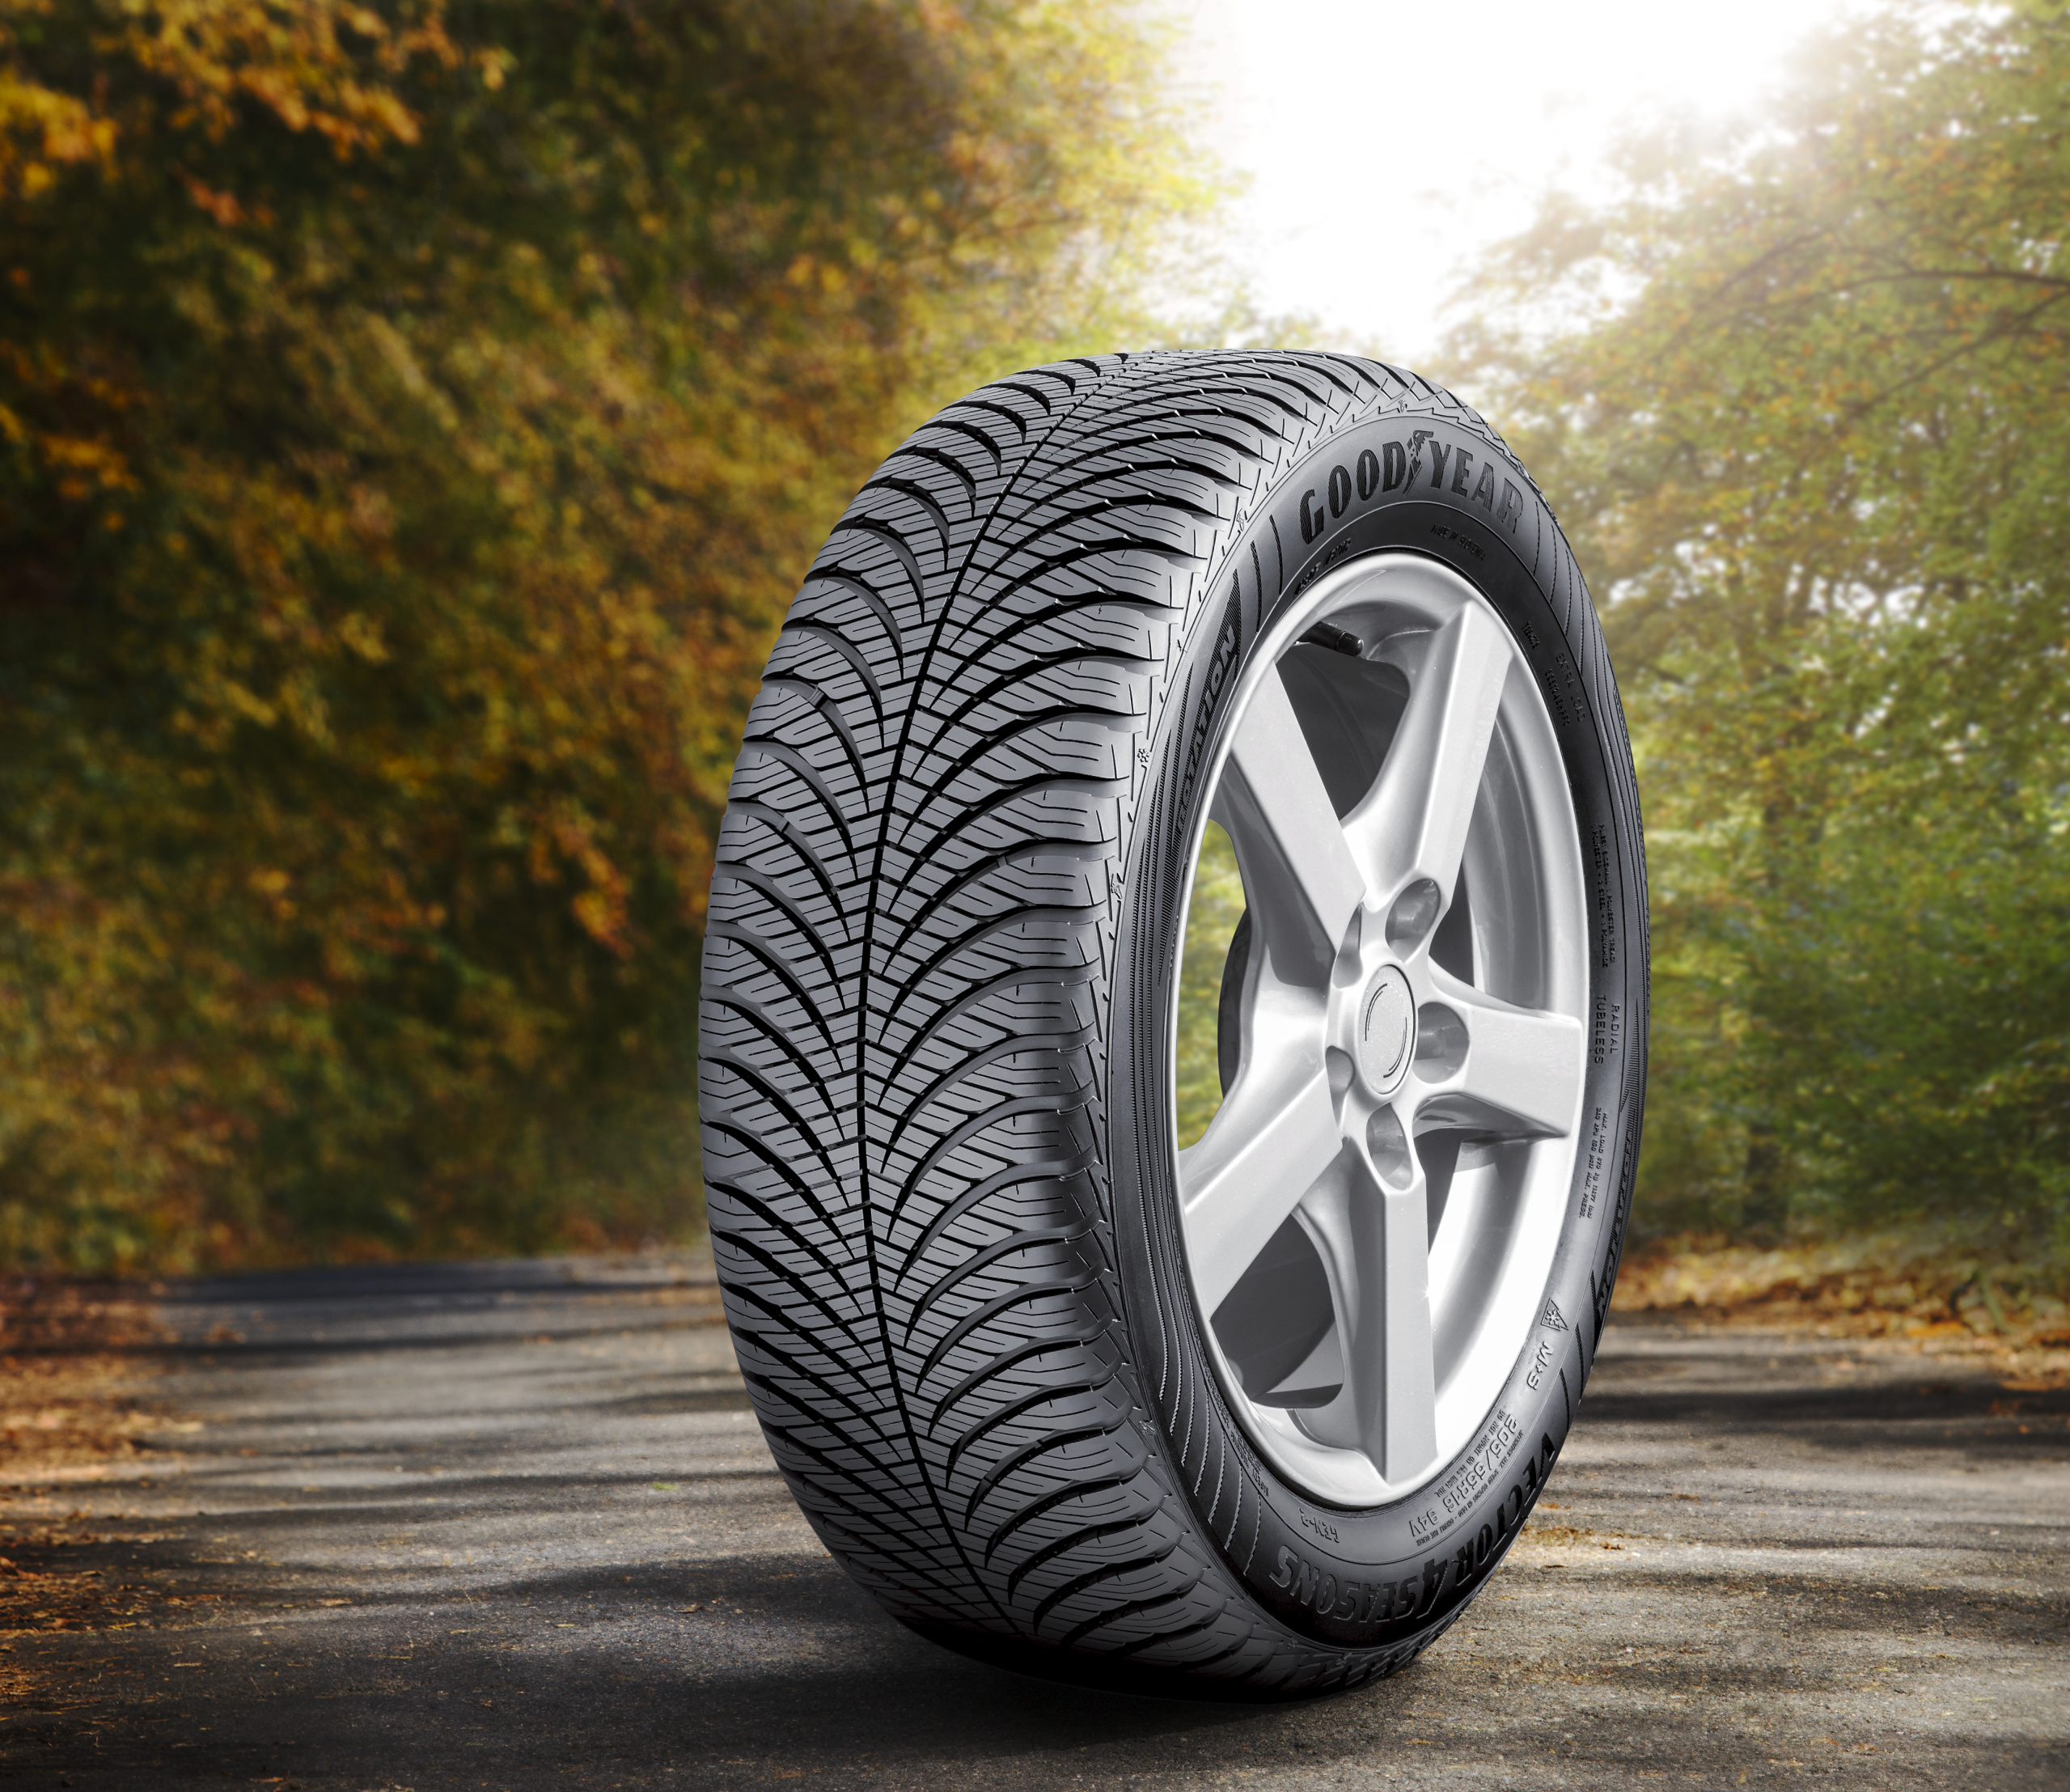 Prestige Uitgaven Voetganger Goodyear 'thrilled' with Auto Express tyre test victory - Tyrepress